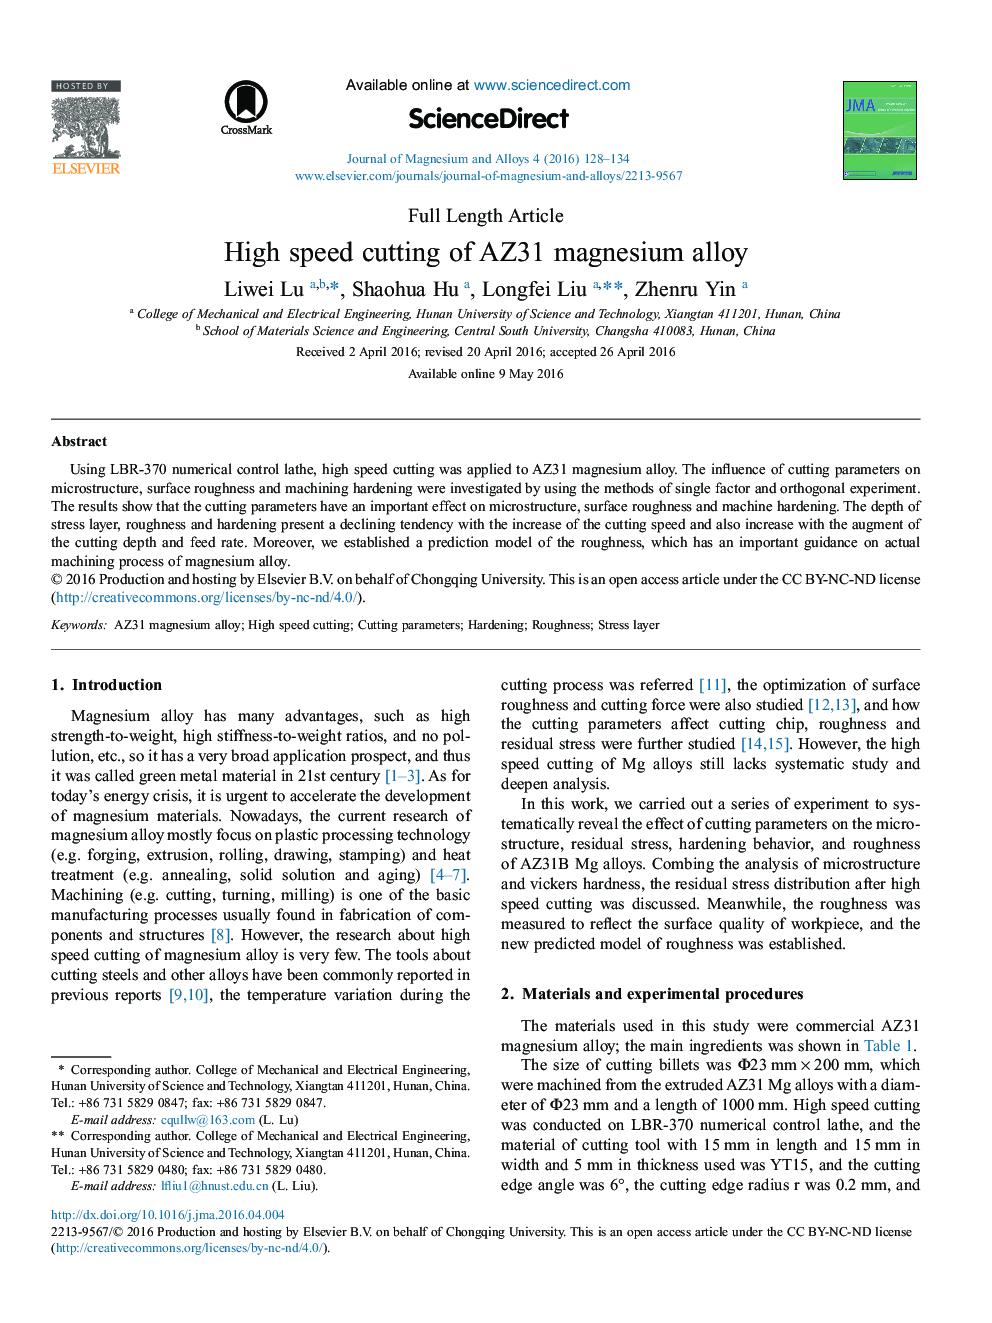 High speed cutting of AZ31 magnesium alloy